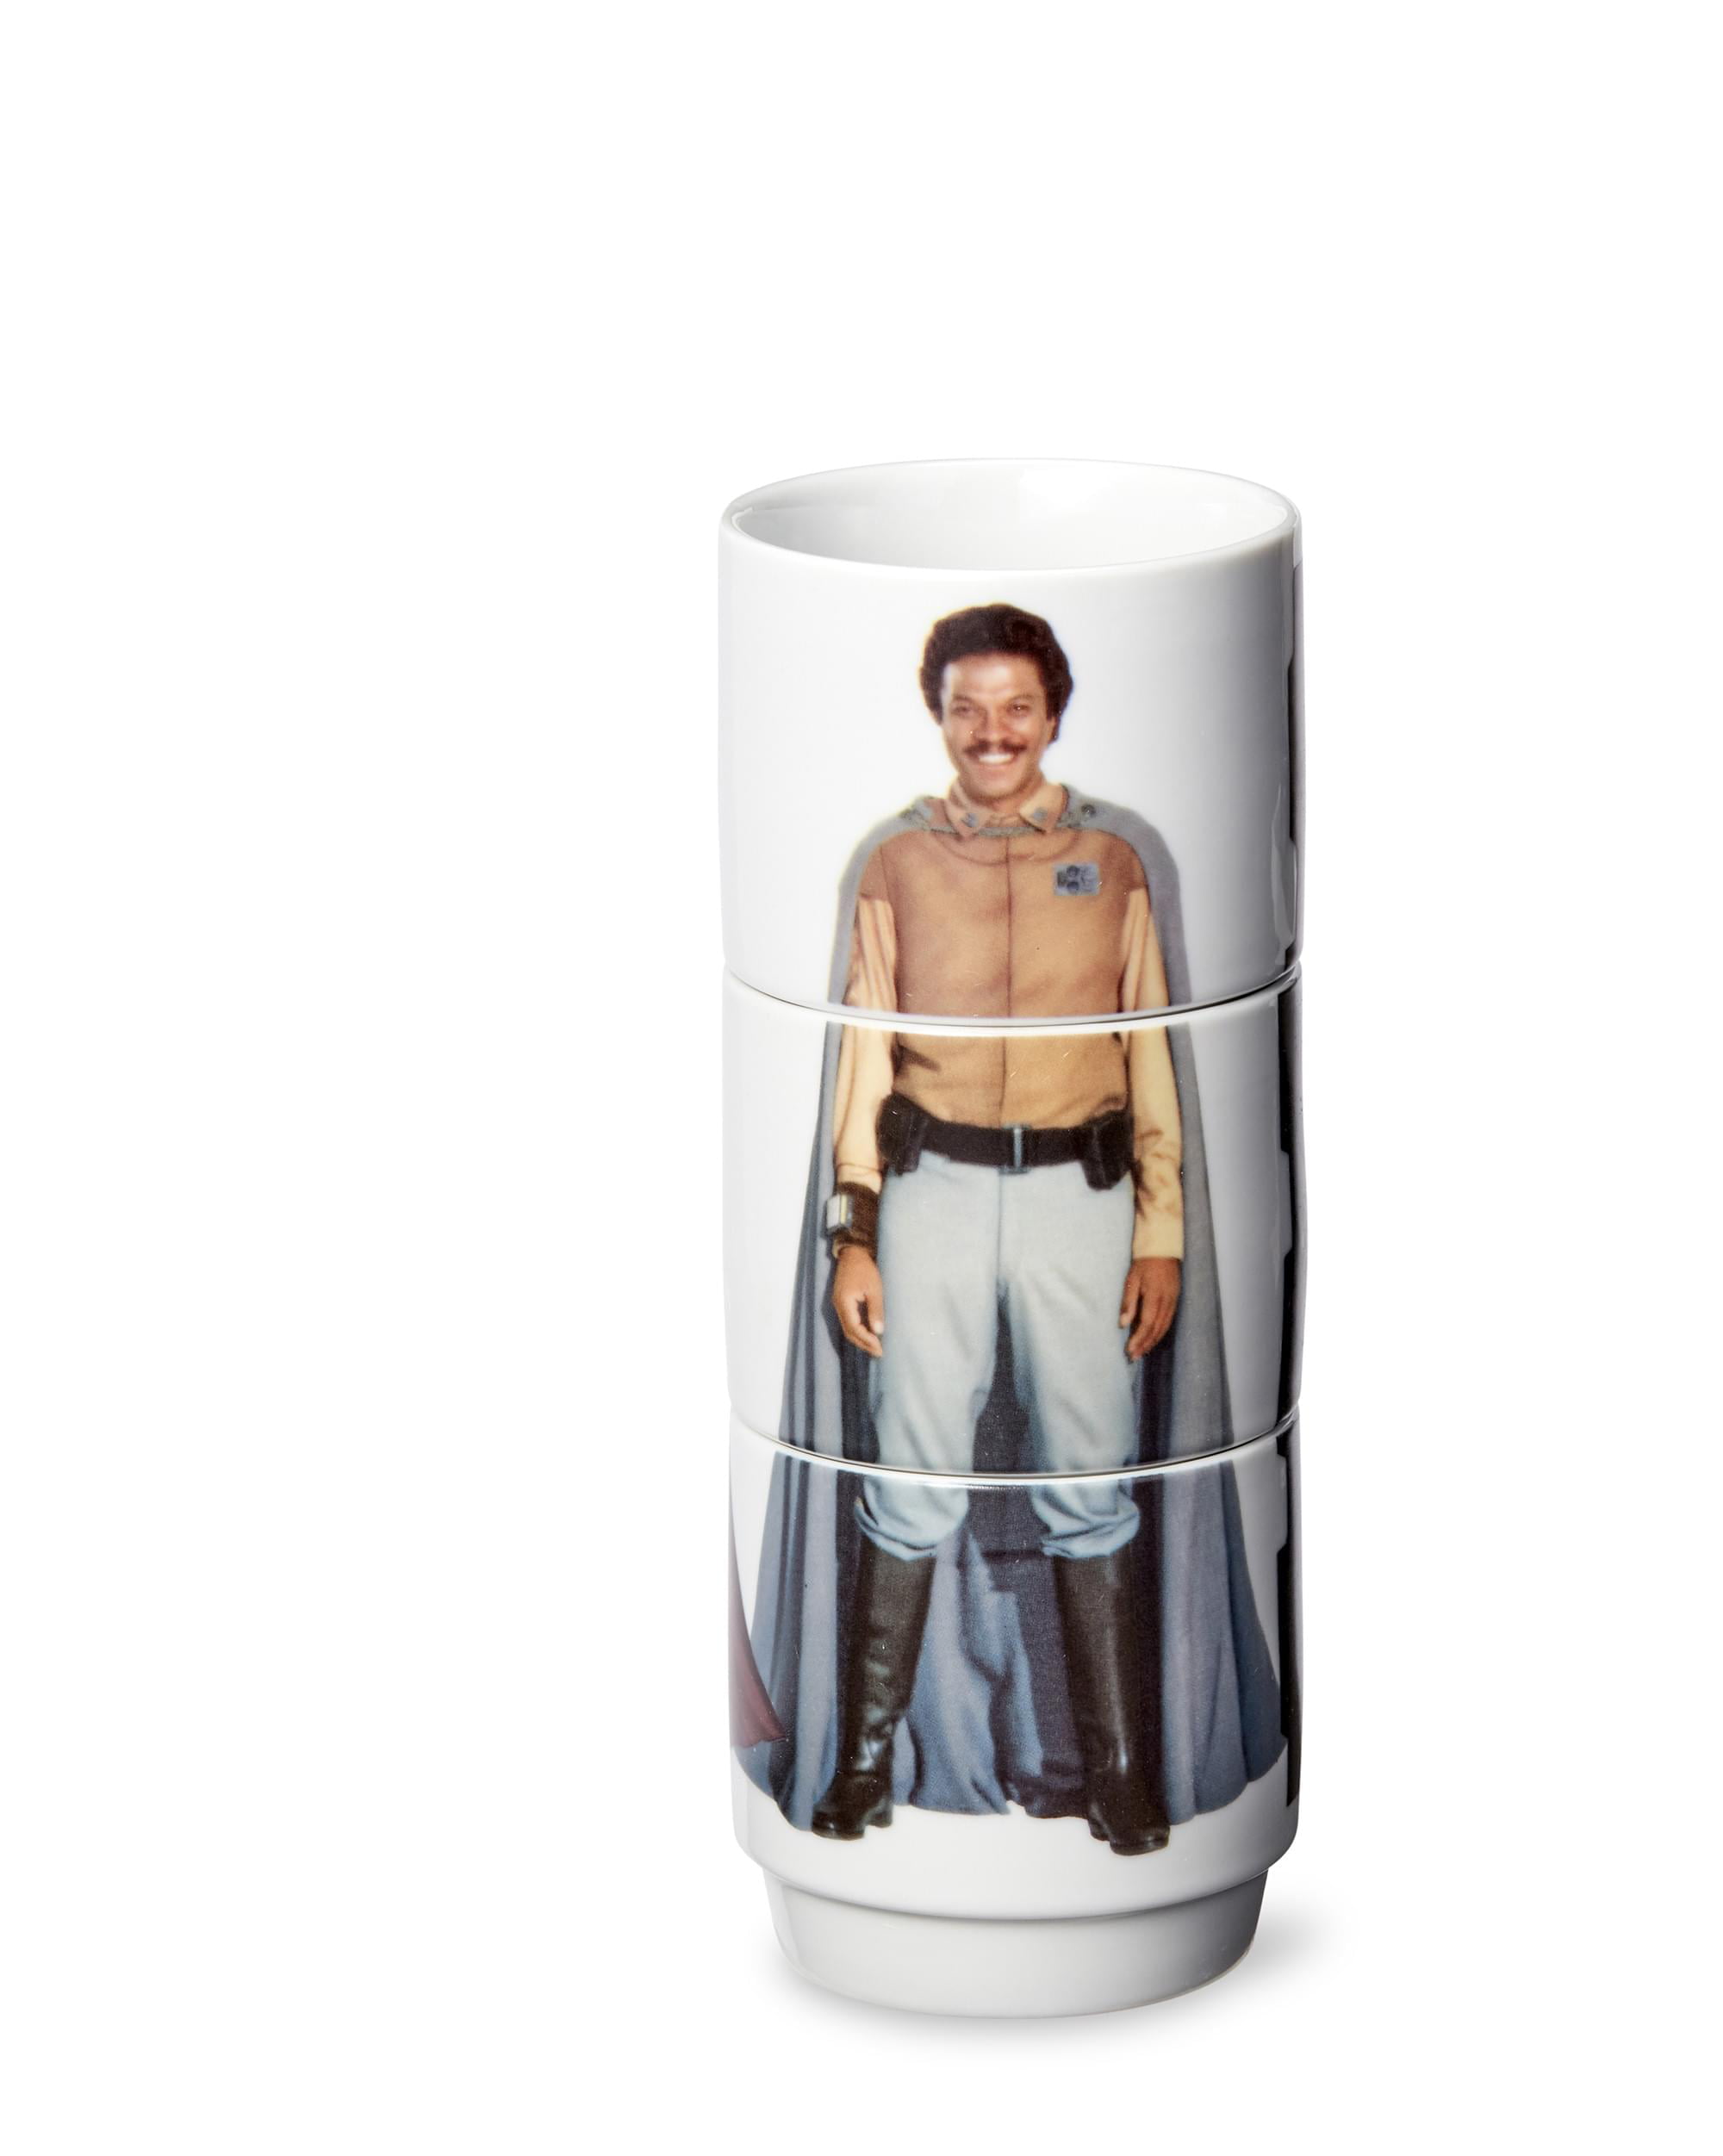 Star Wars Han Solo Frozen In Carbonite - PA Coffee Mug by Leonardo